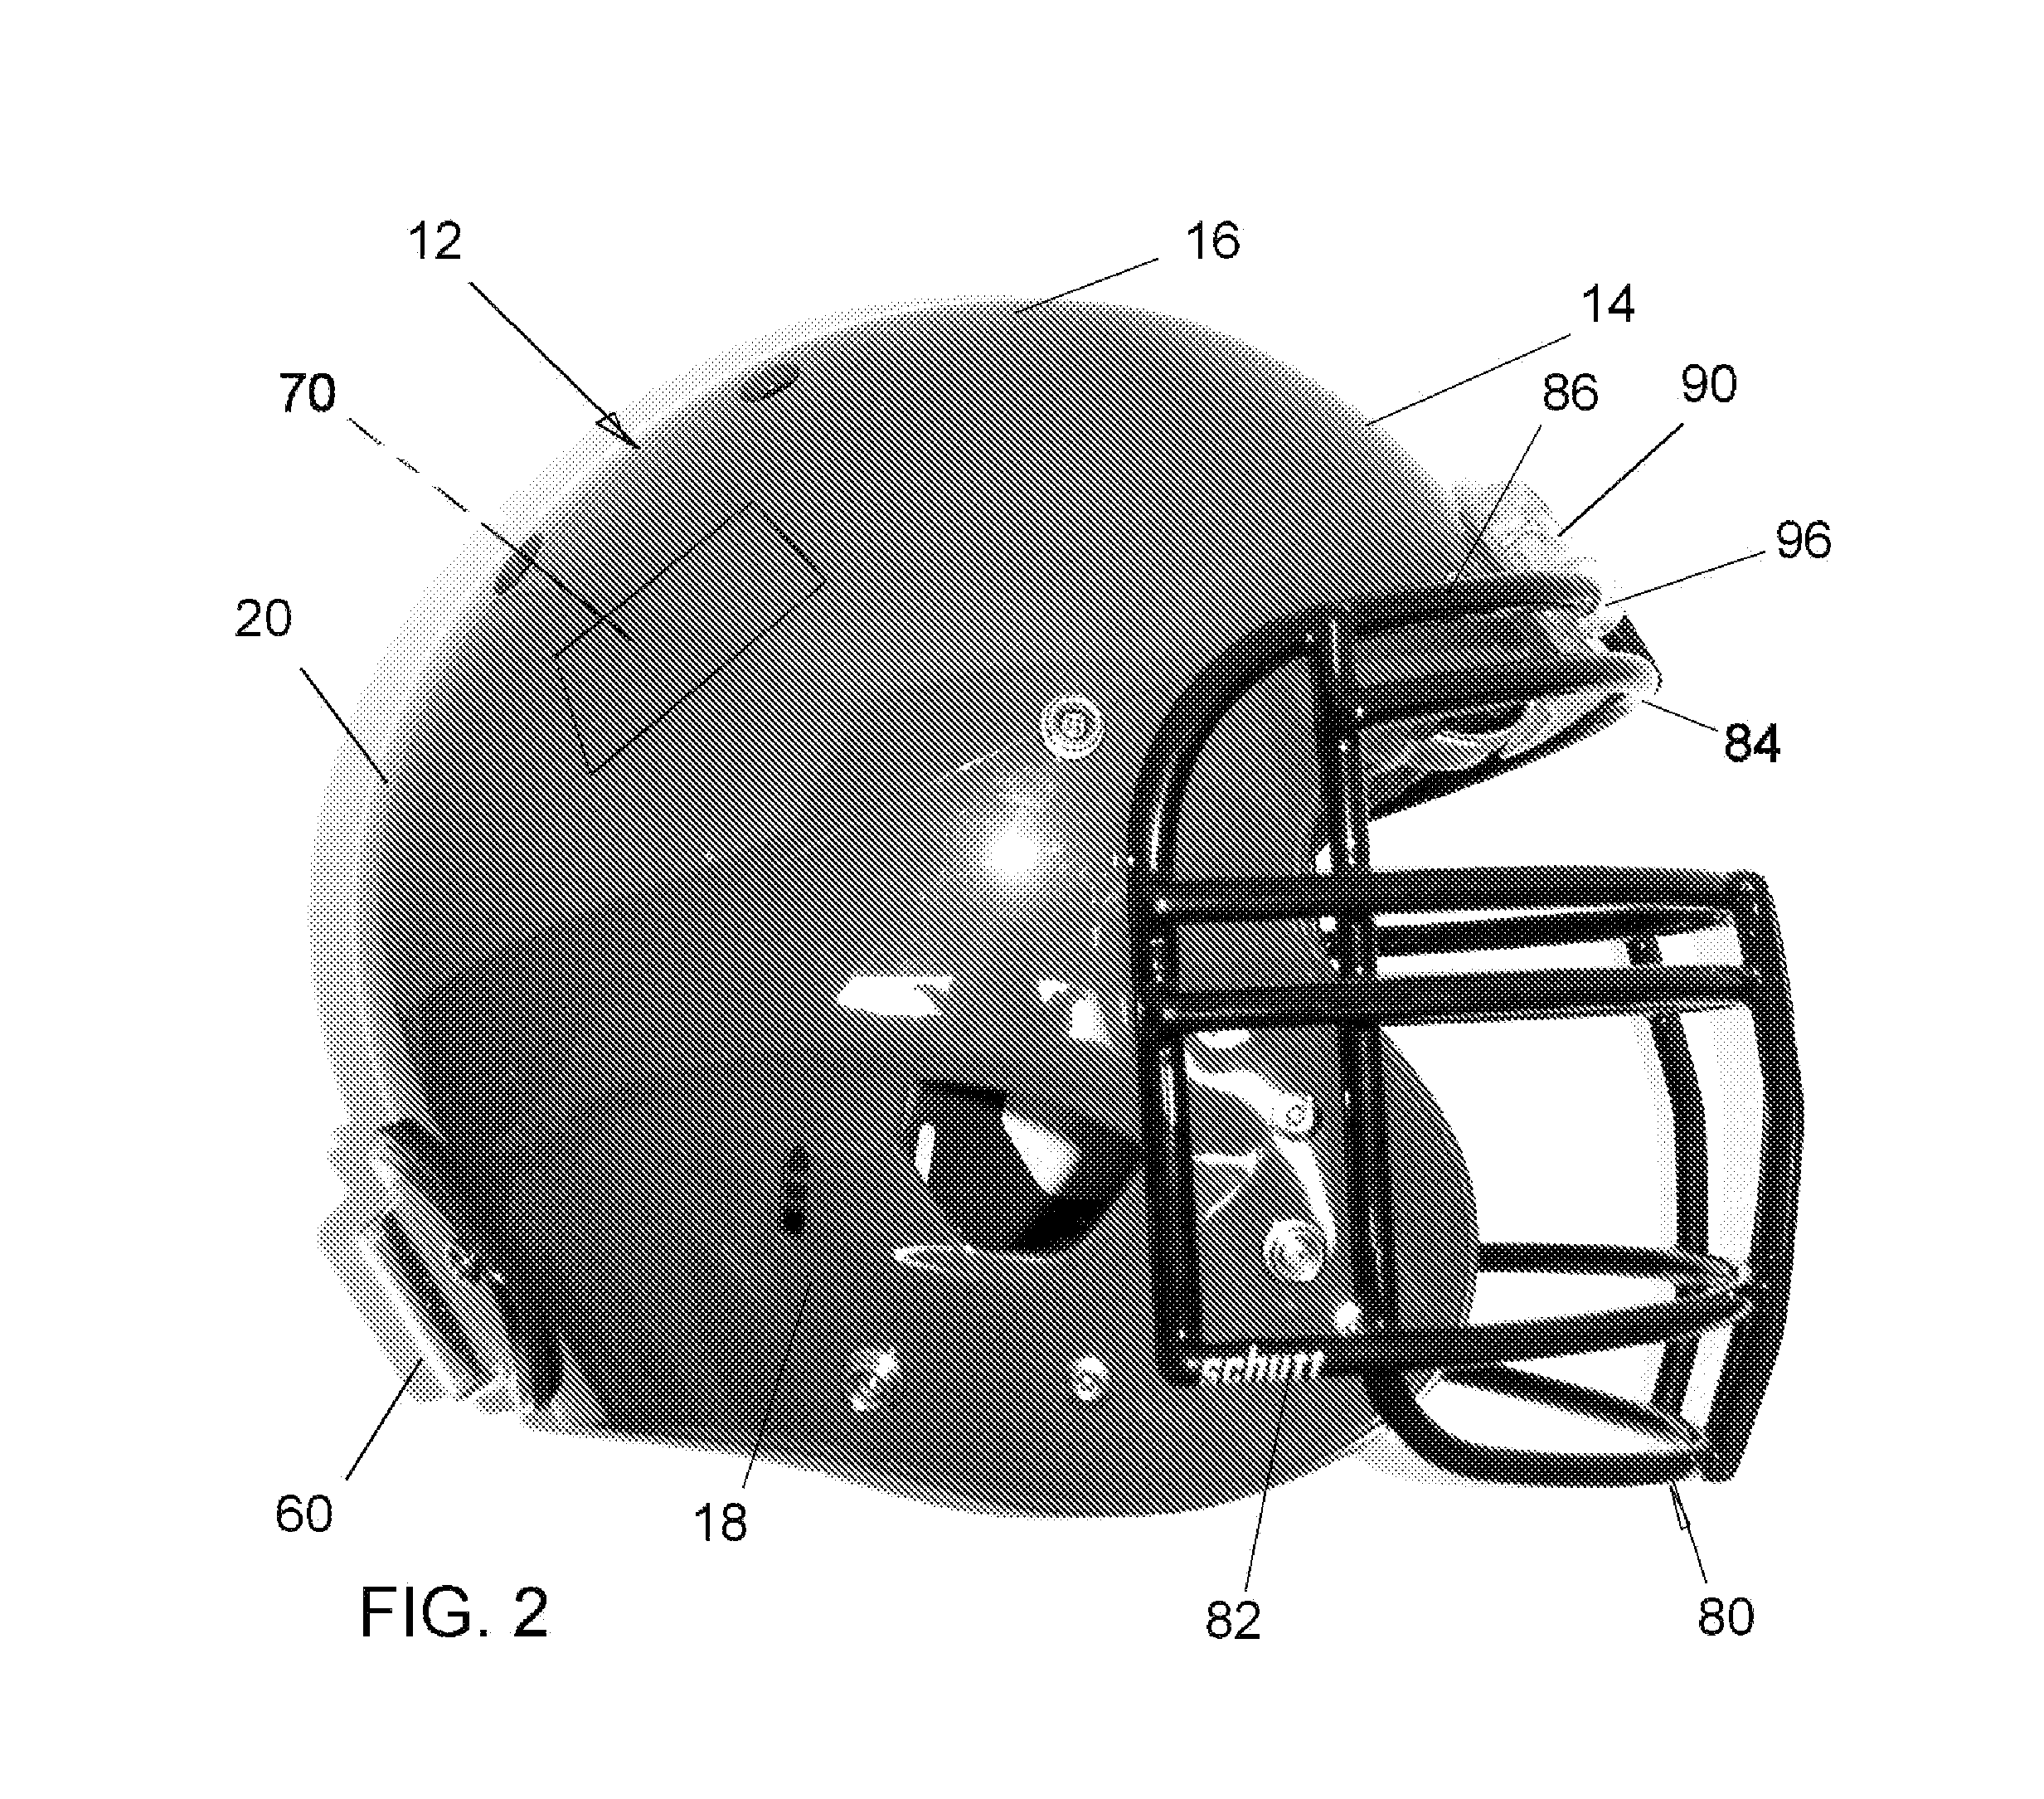 Video camera housing for football helmet